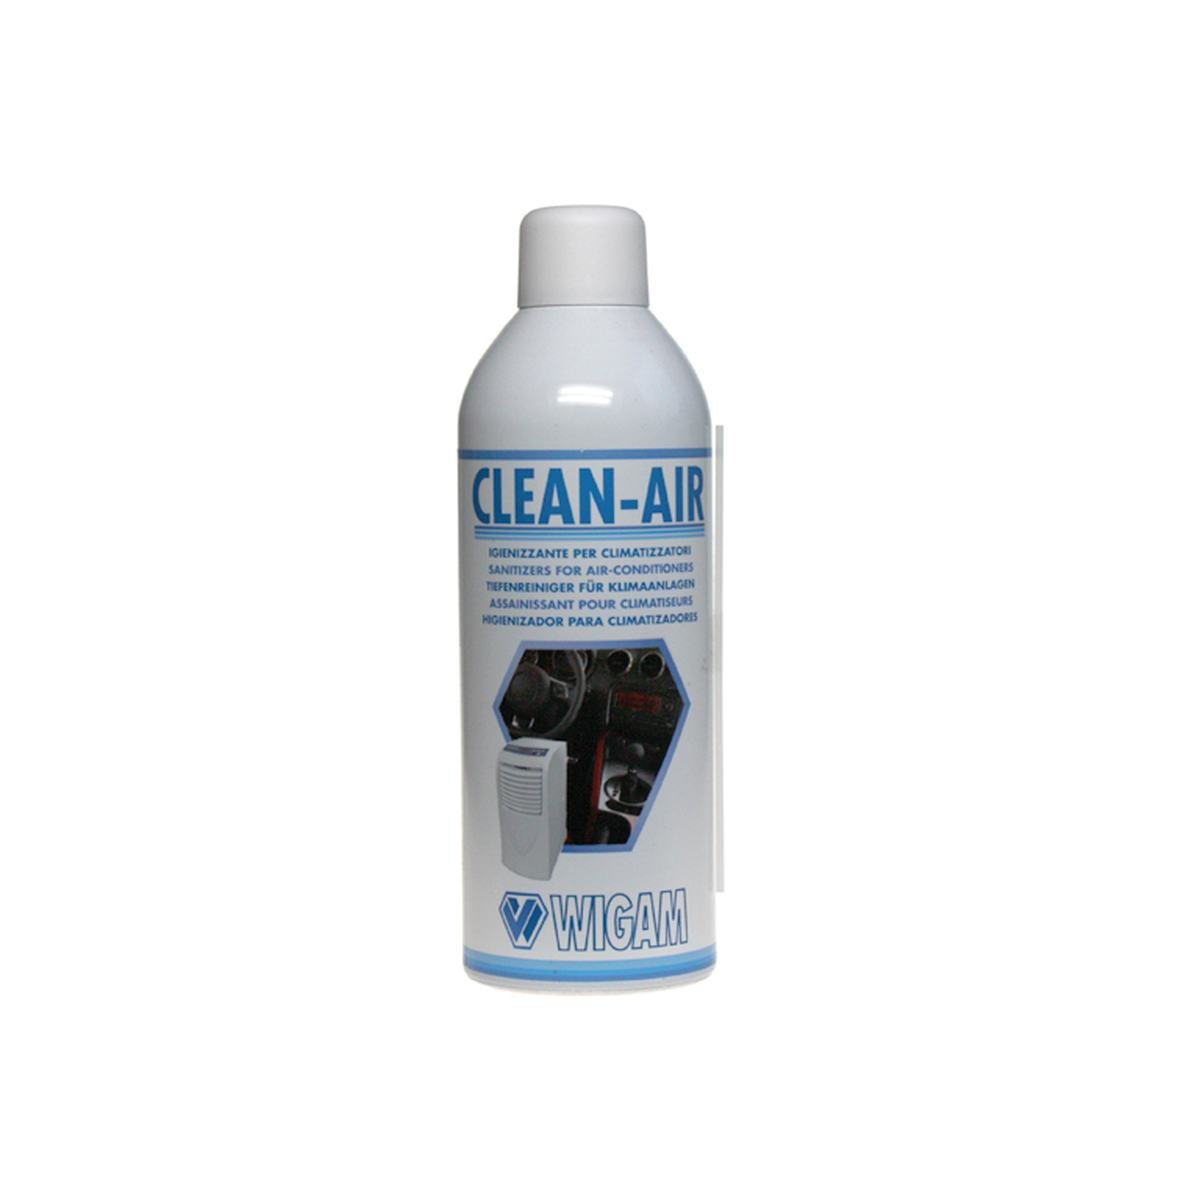 Clean-air desinfektionsspray på burk med 400 ml.